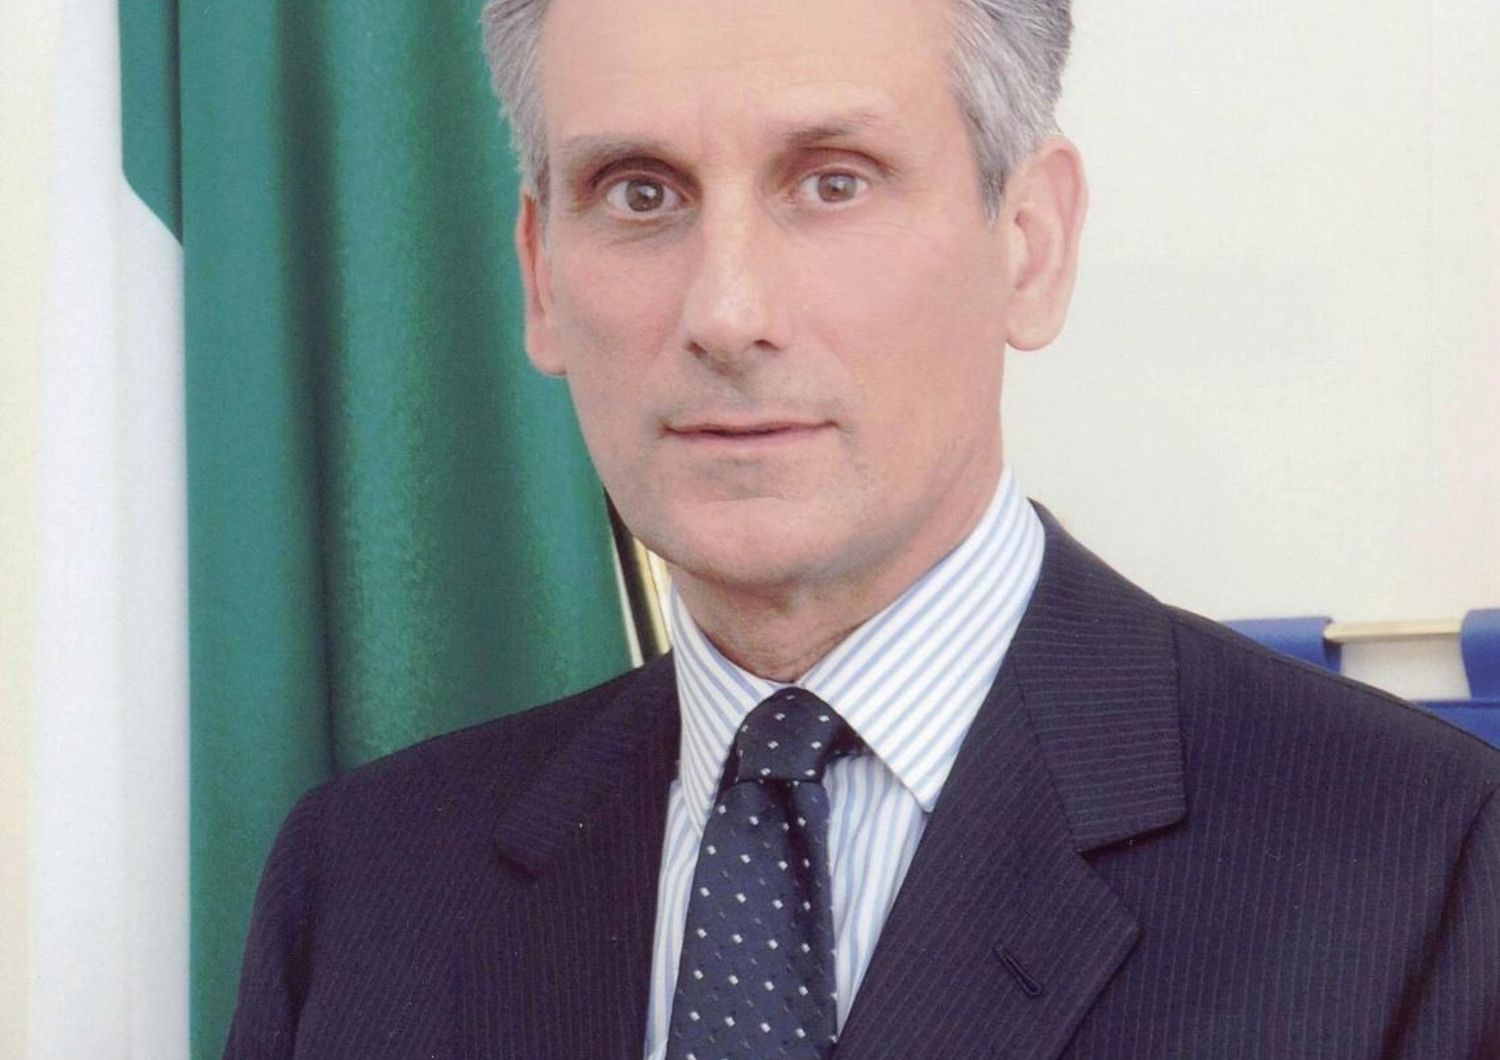 ambasciatore italiano in Tunisia, Raimondo De Cardona&nbsp;